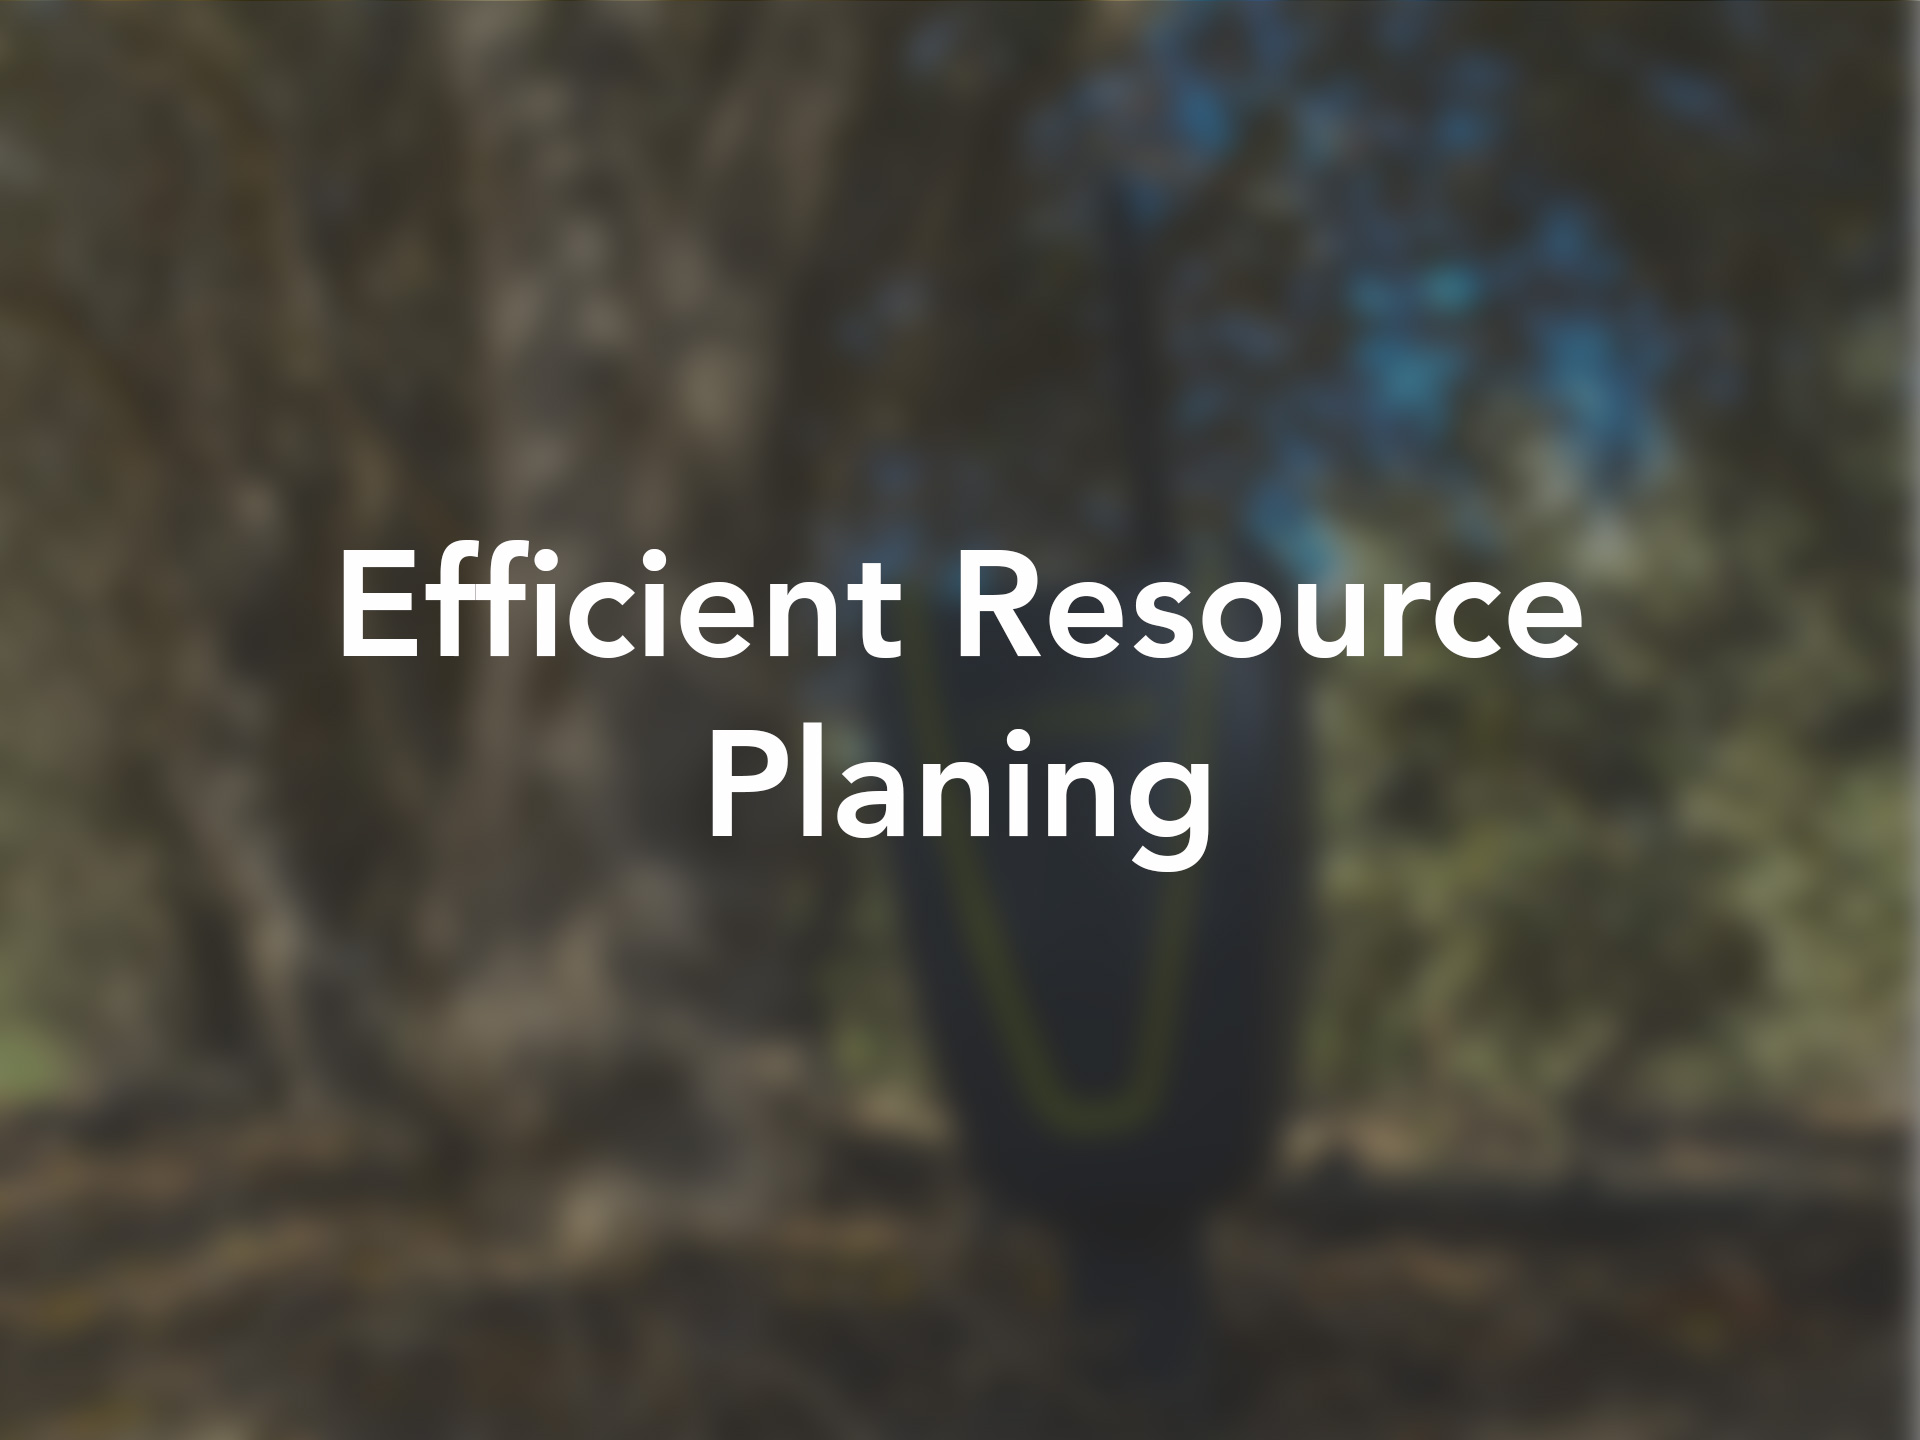 Efficient Resource Planing